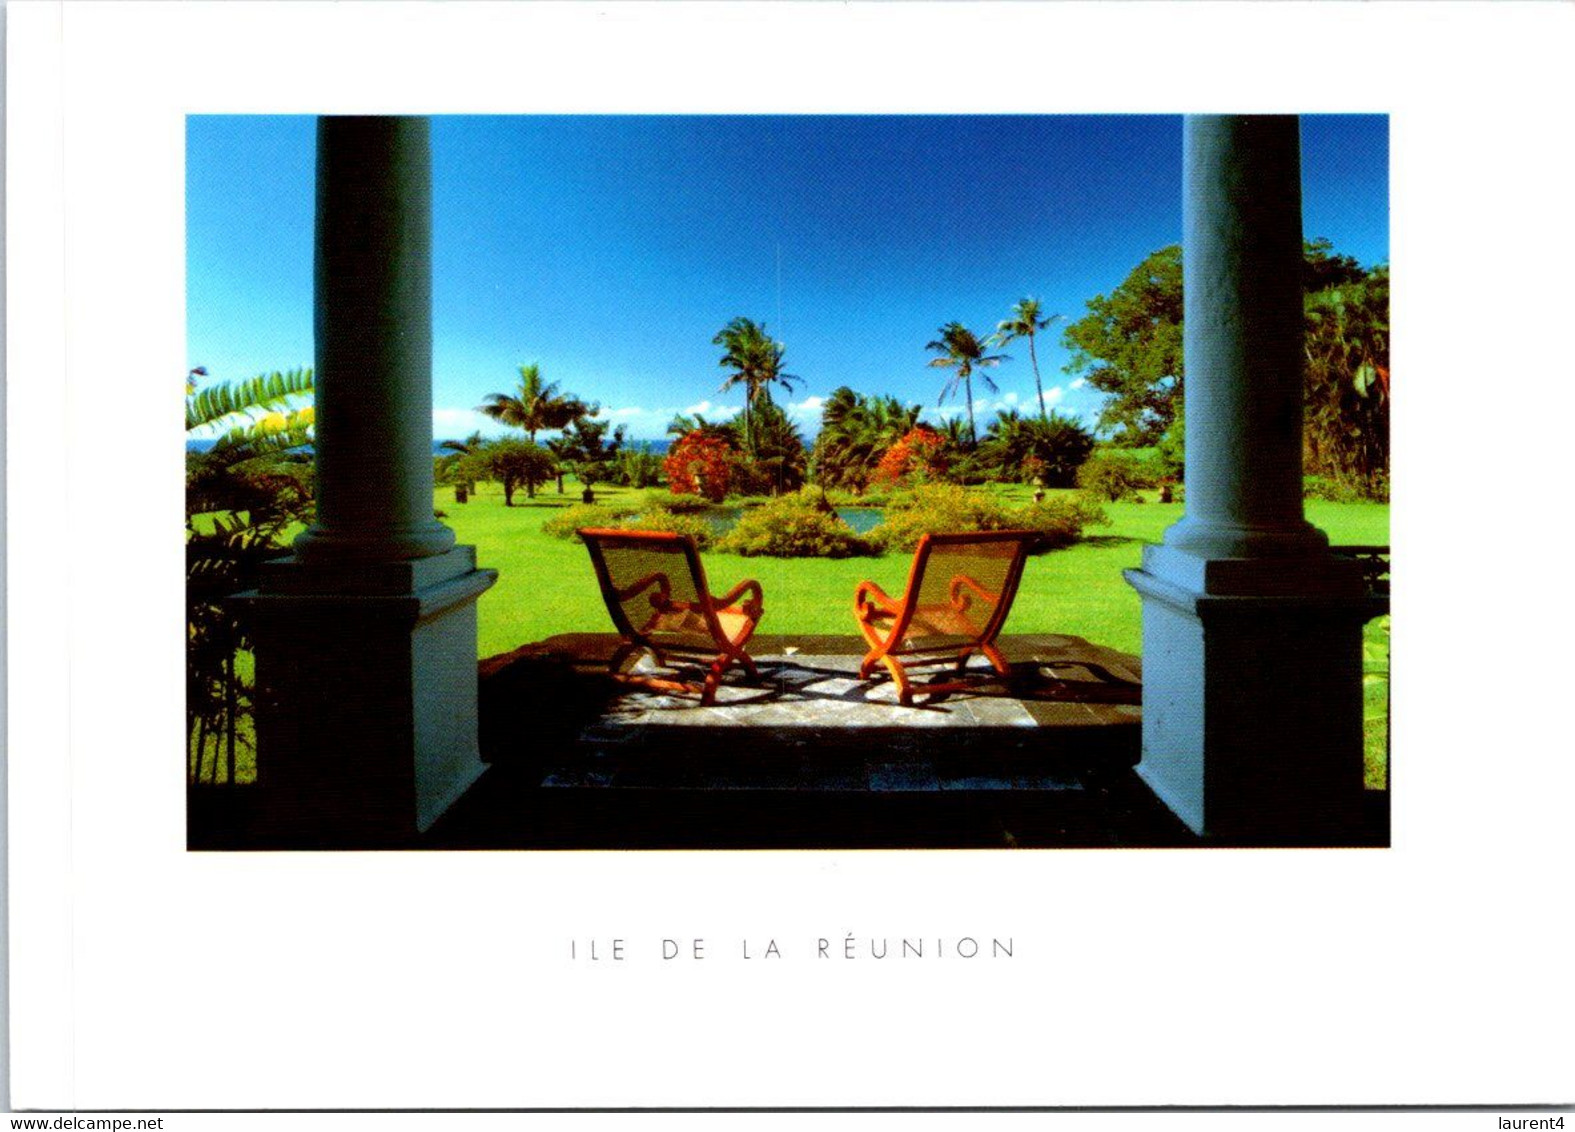 (2 L 37) France - Posted 2005 - Ile De La Réunion / Reunion Island - Reunion